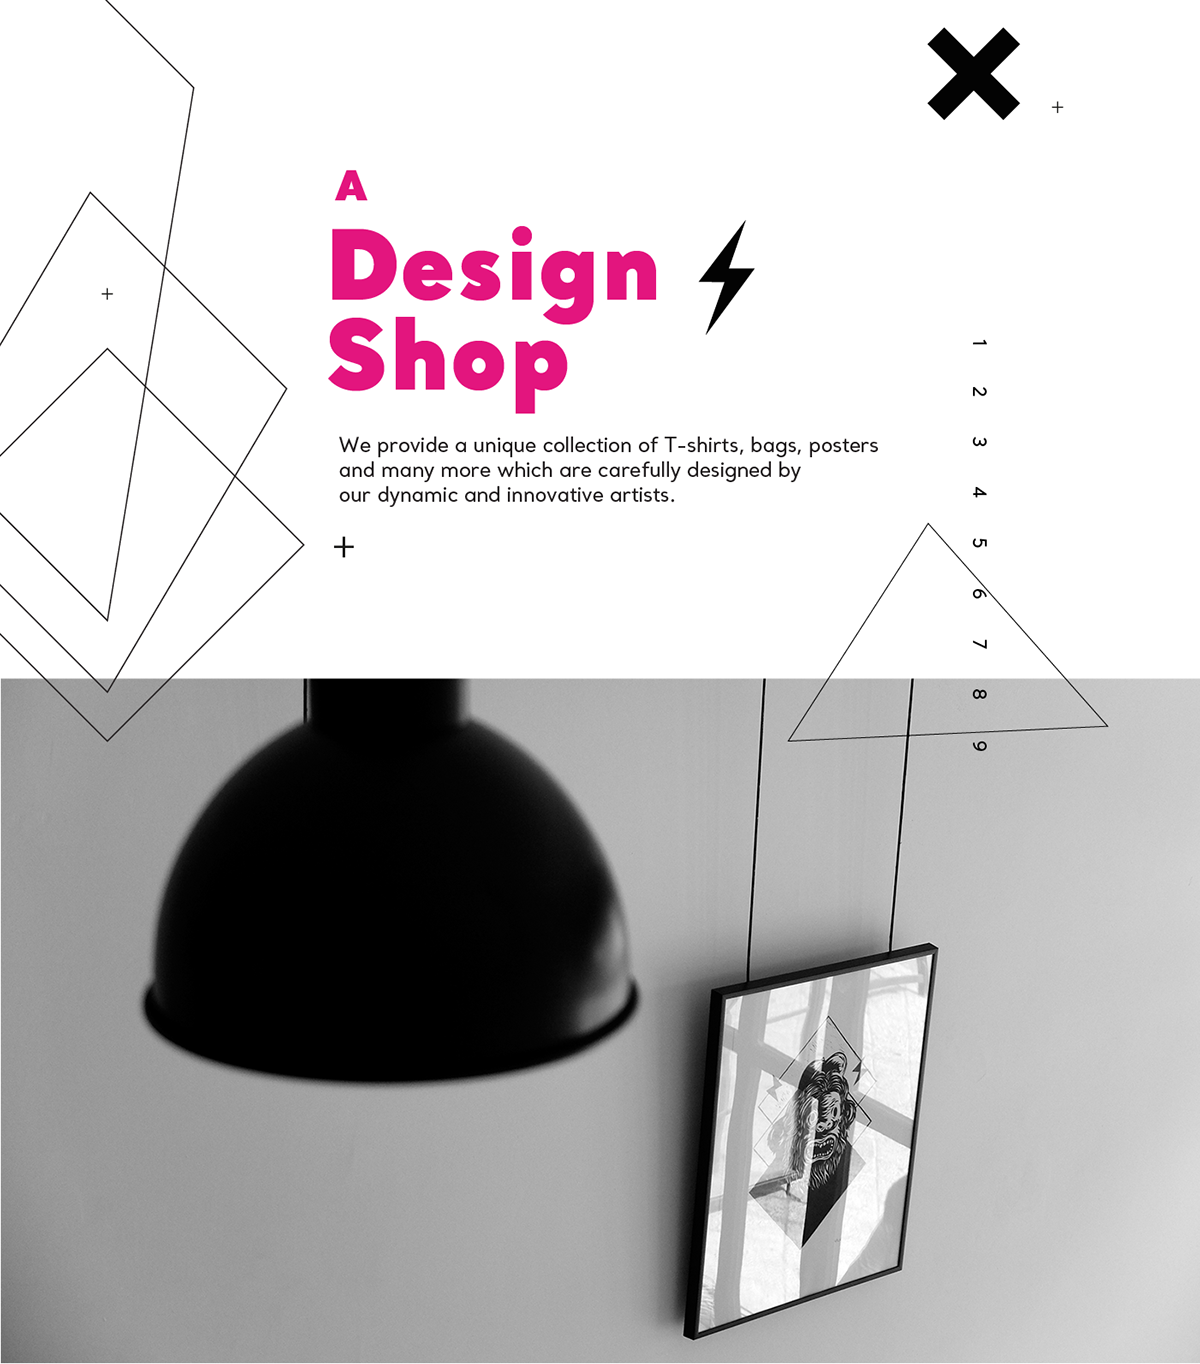 agency Coffee creative cafe corporate logo design rocket Advertising  print